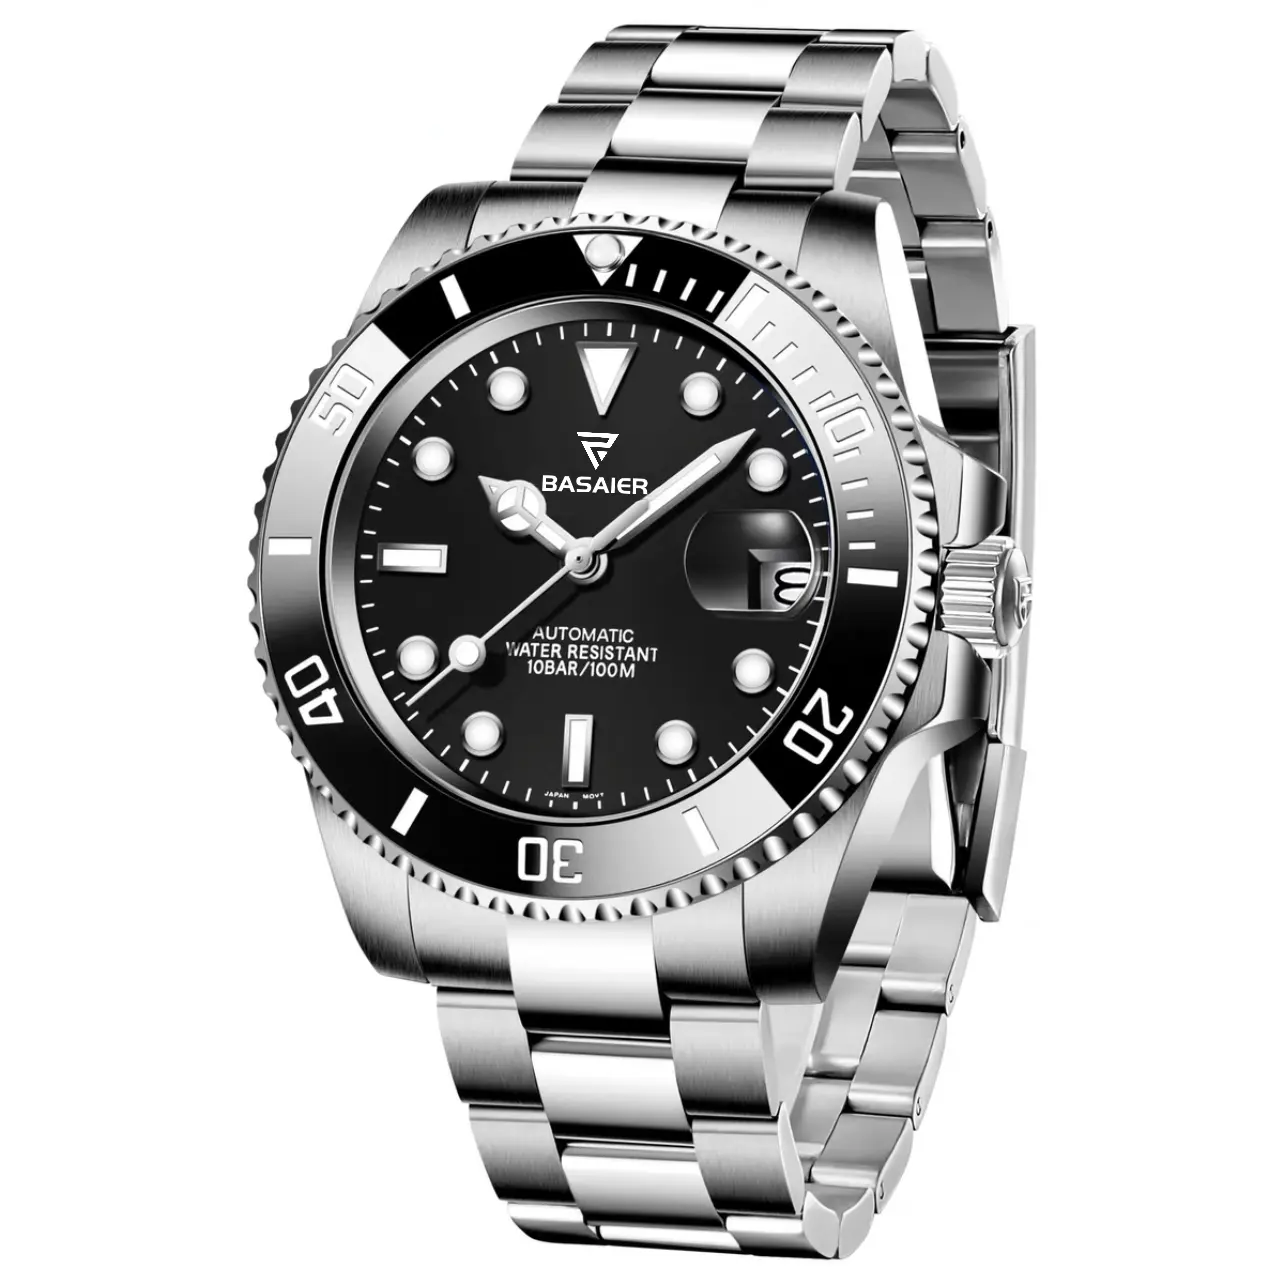 Rolex watch men